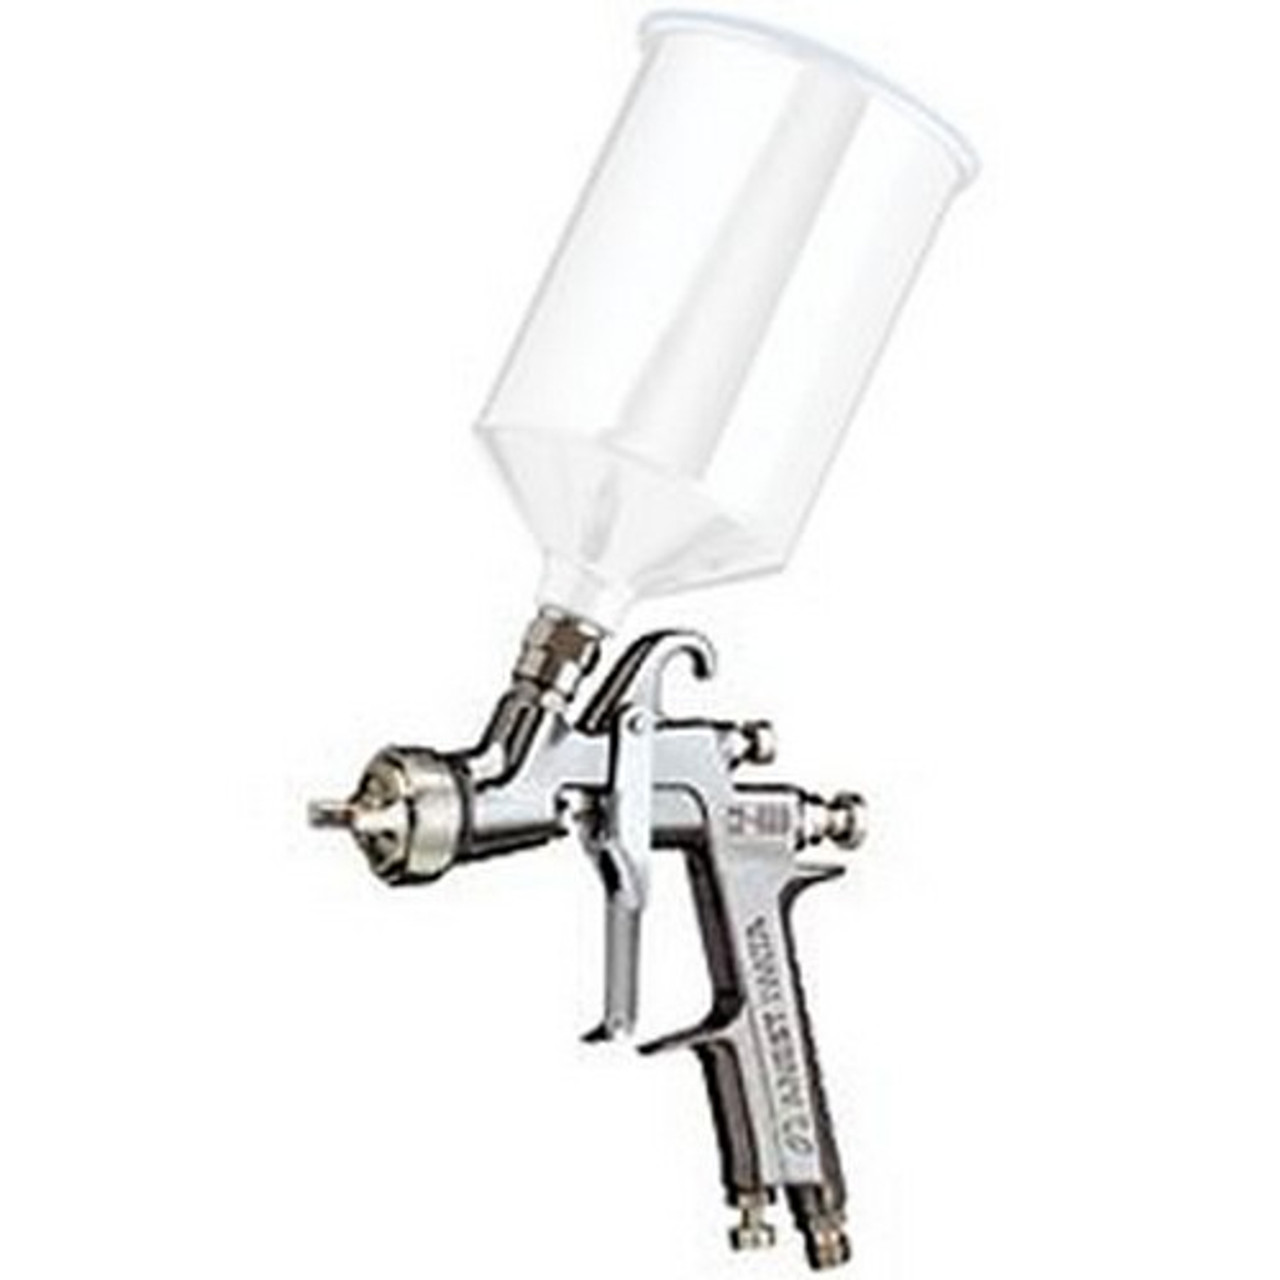 Iwata - 5640 - LPH400-LV 1.3mm Gravity Feed Spray Gun